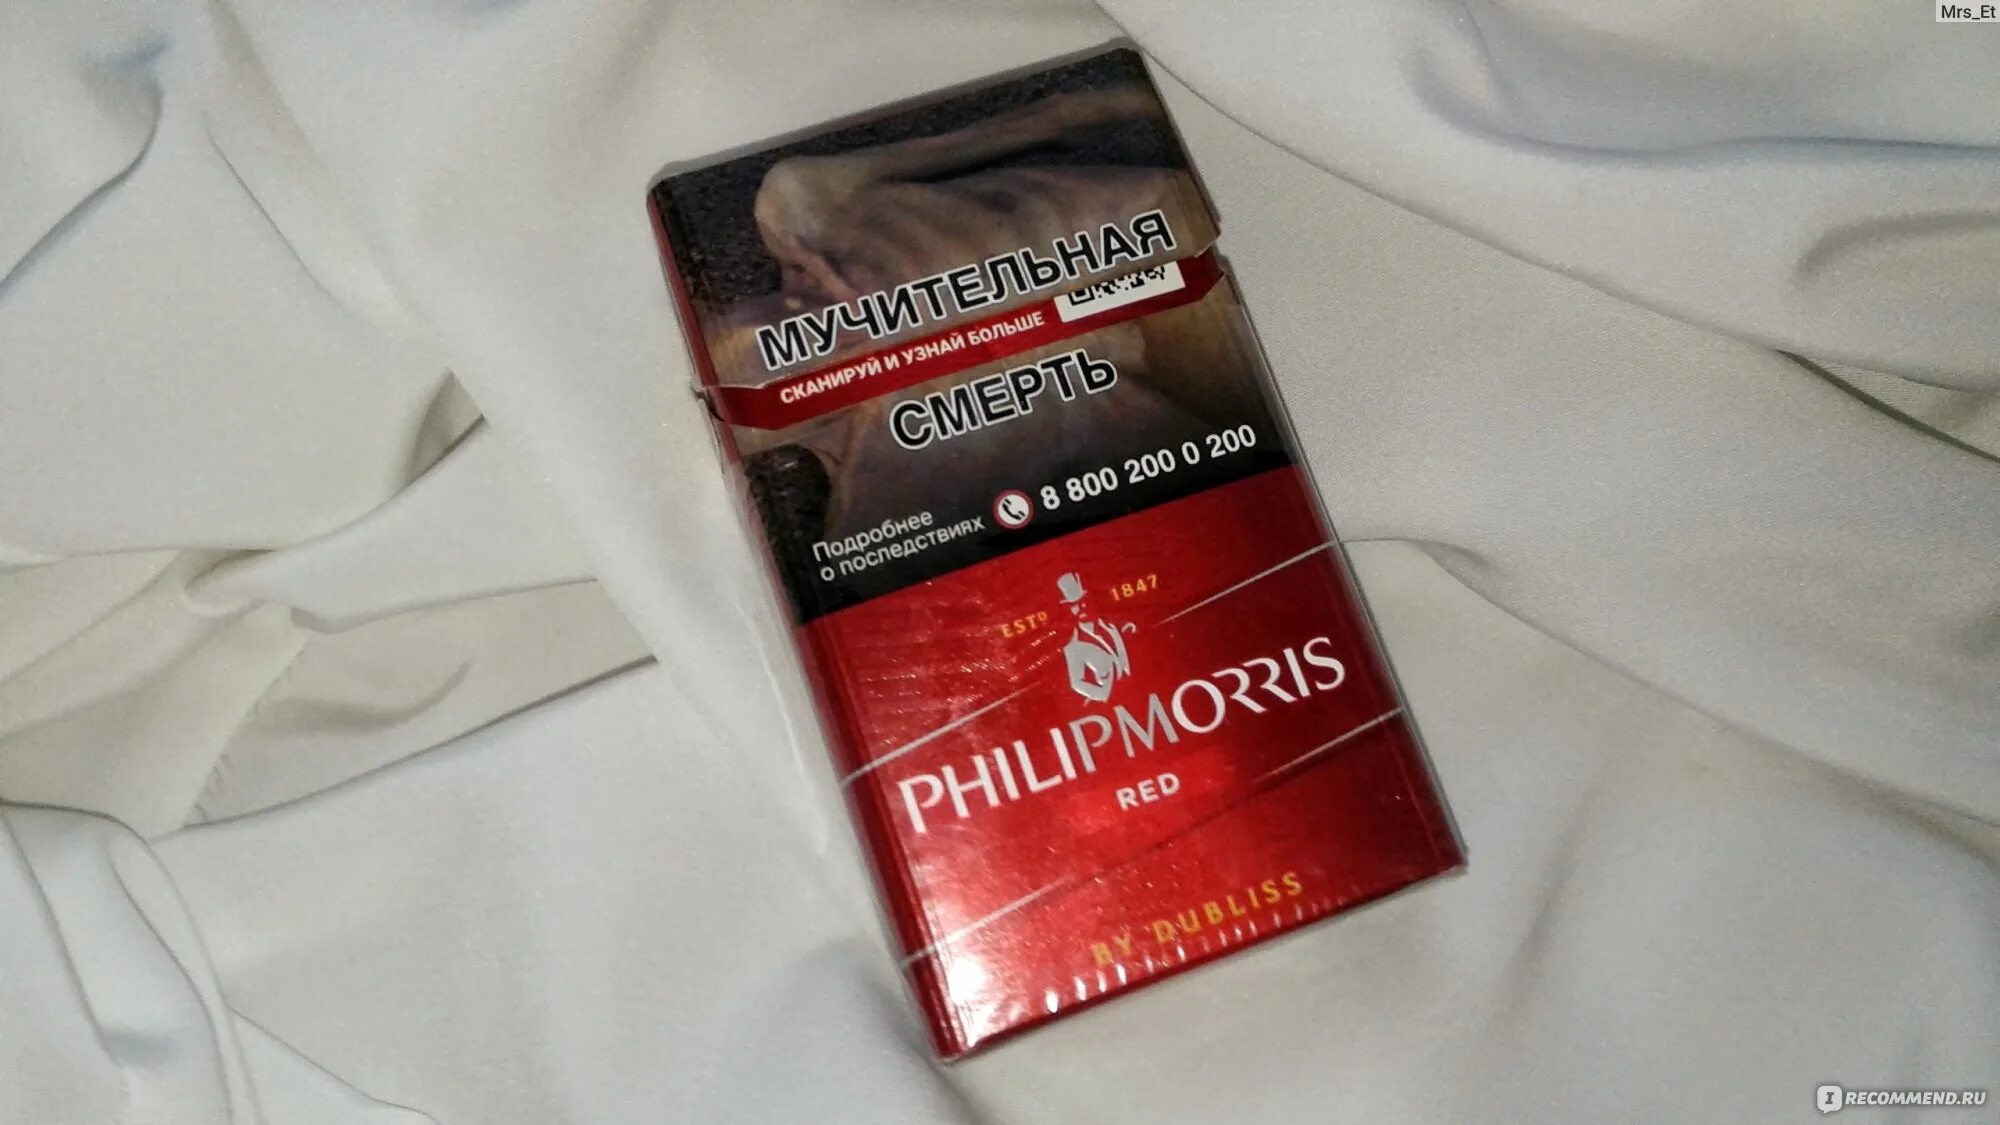 Филипс Морис сигареты красные. Сигареты Филип Моррис ред. Сигареты Philip Morris красный. Филипс Морис красный.